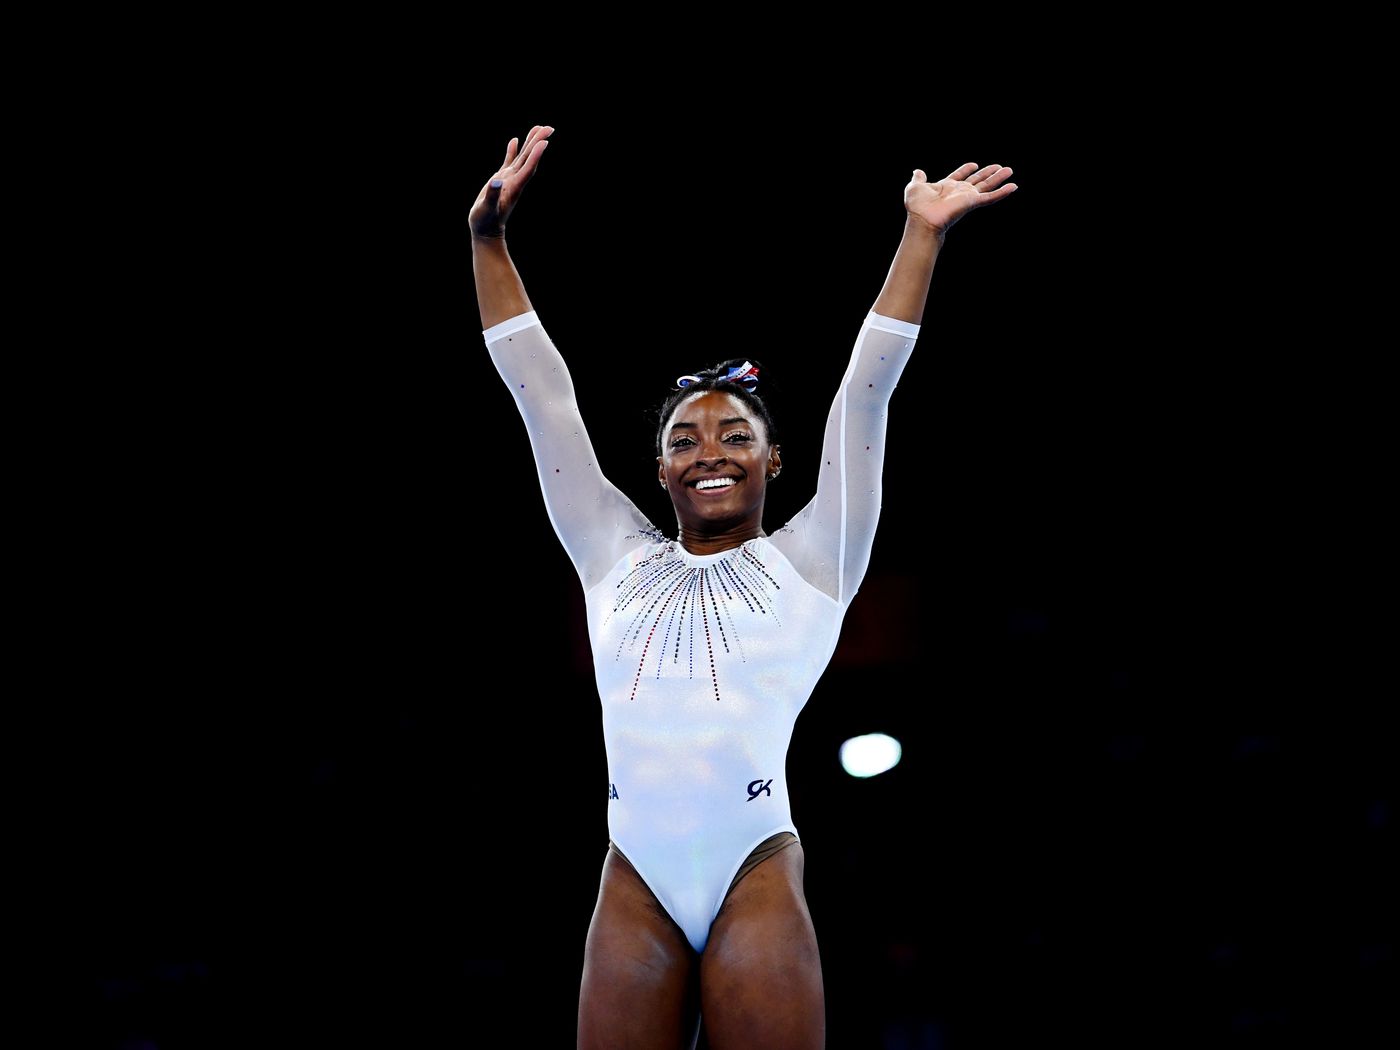 Simone Biles: Simone Biles is the greatest female gymnast ever